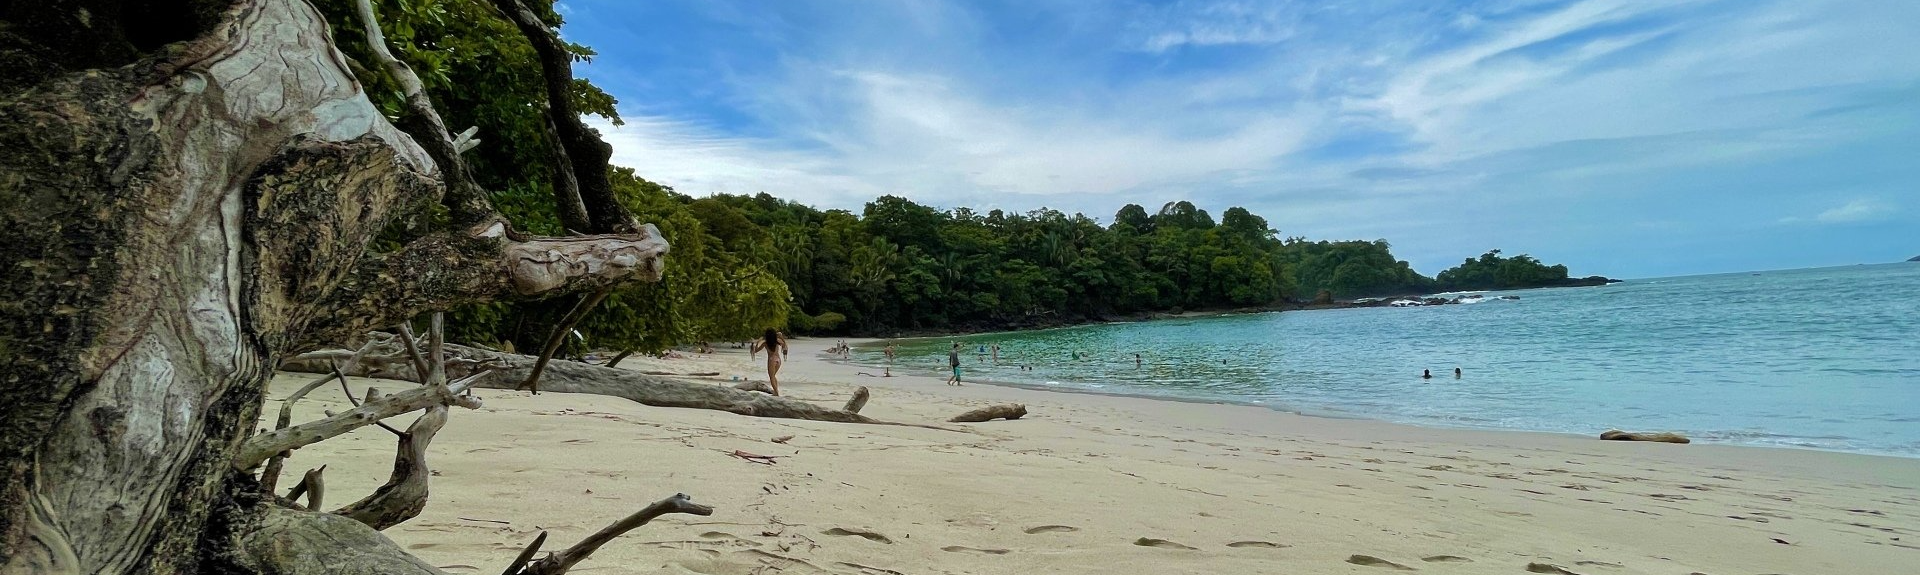 Manuel Antonio Beaches - Playa Manuel Antonio